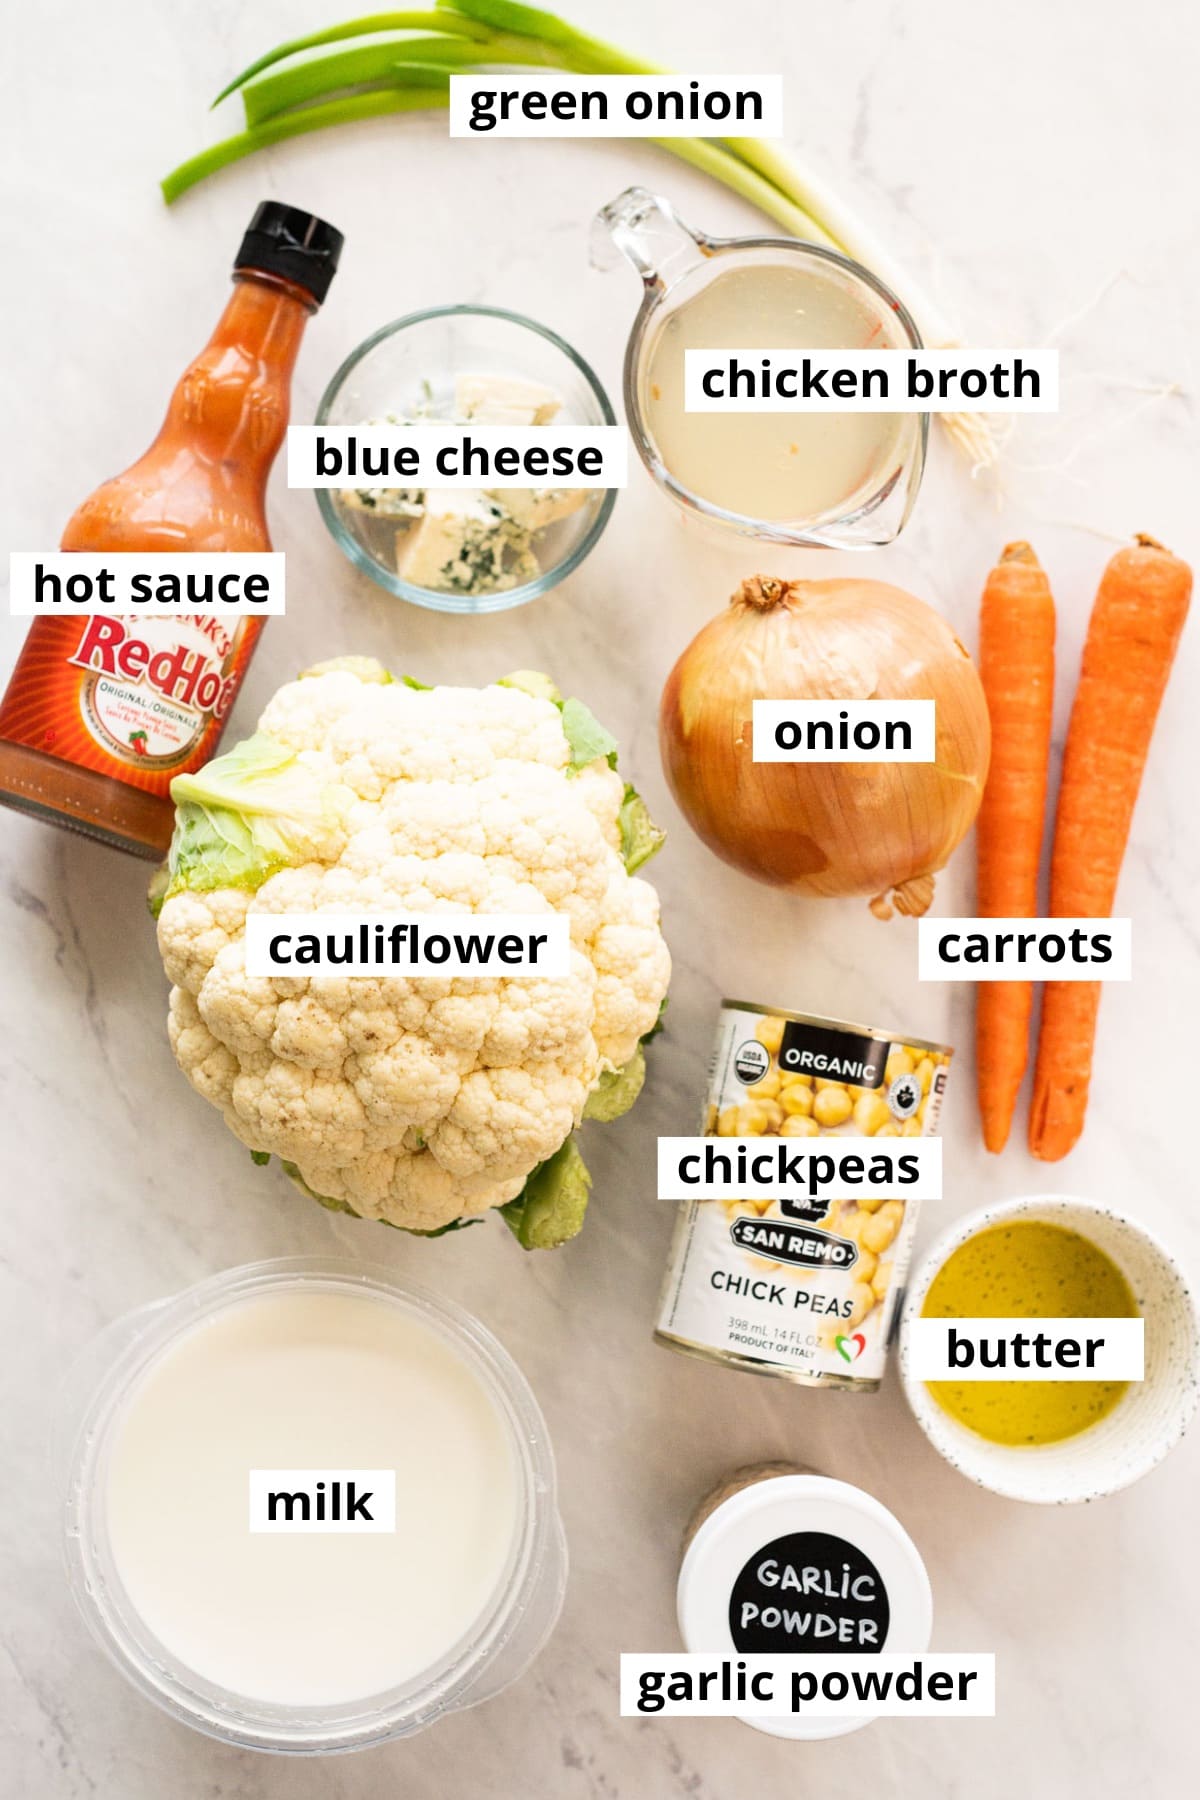 Cauliflower, carrots, onion, milk, broth, butter, chickpeas, hot sauce, blue cheese, garlic powder, green onion.